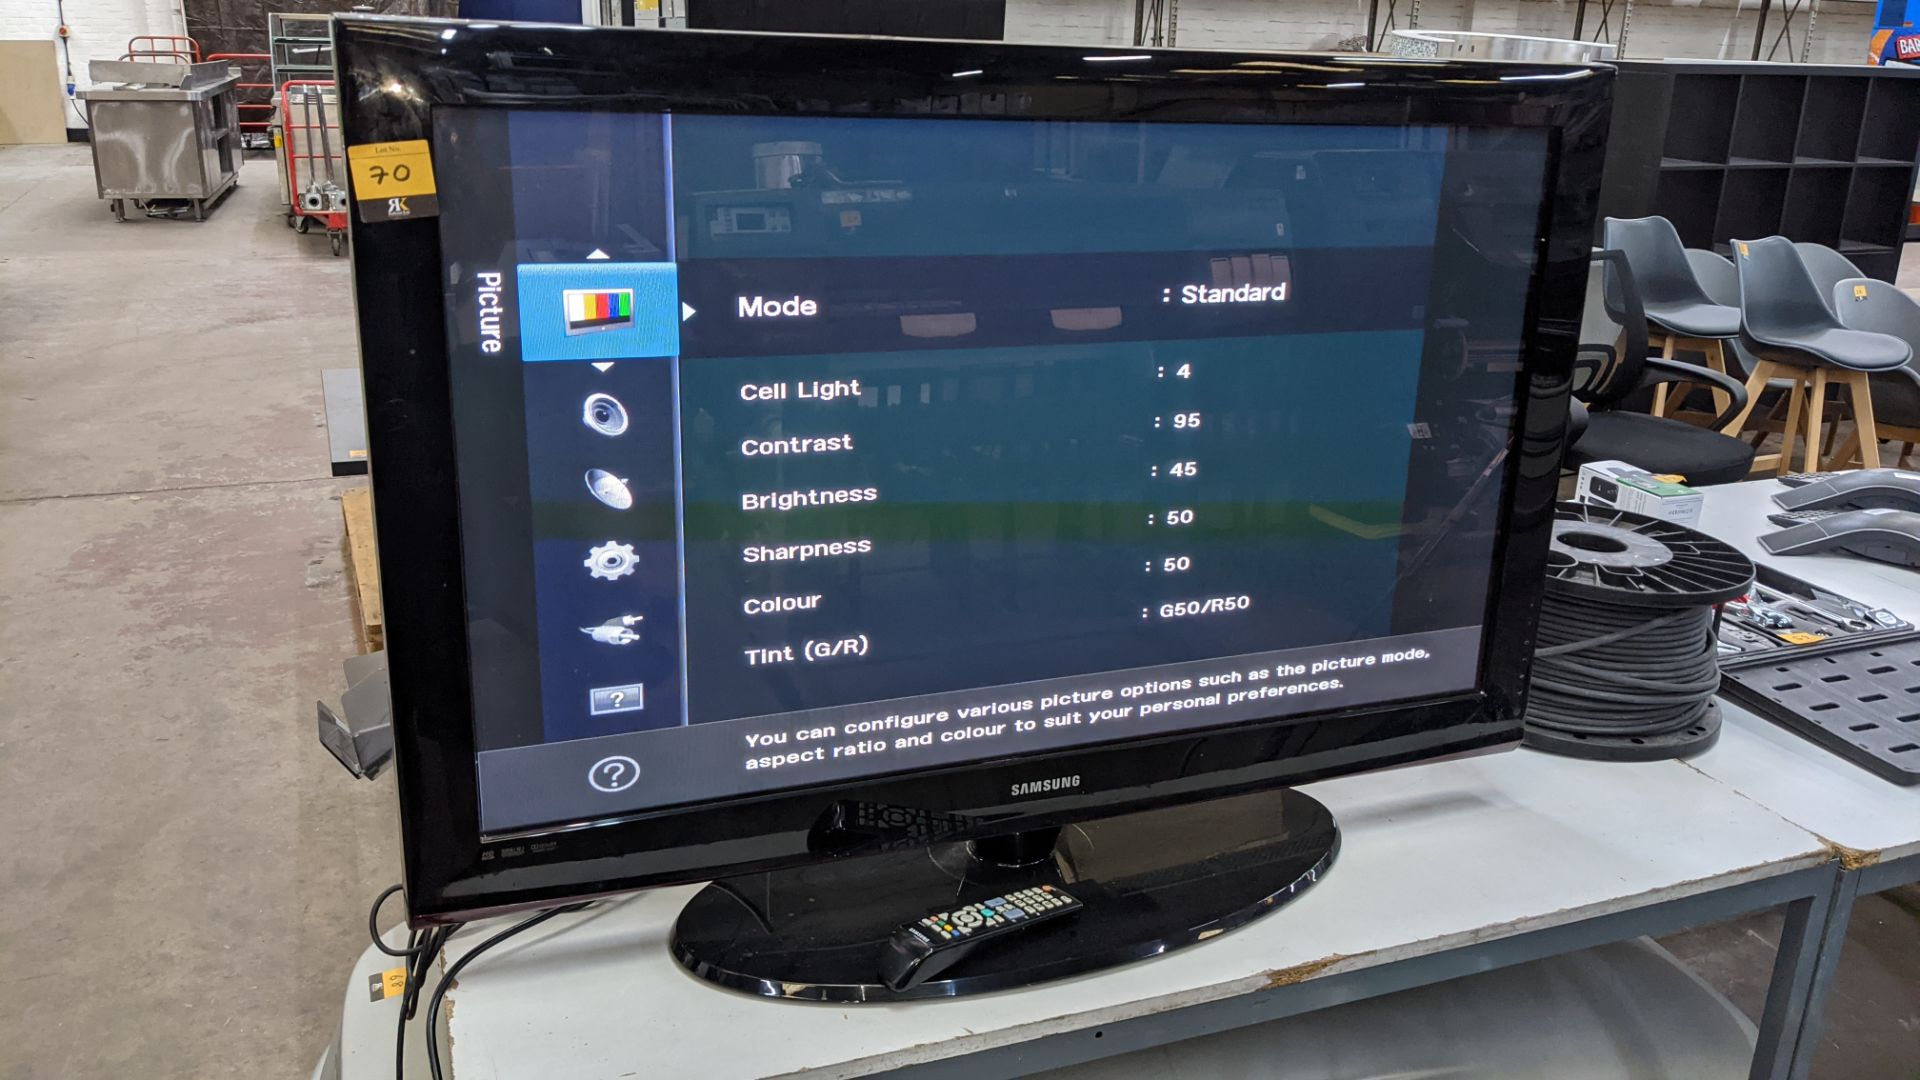 Samsung 42" plasma widescreen TV including tabletop stand & remote control